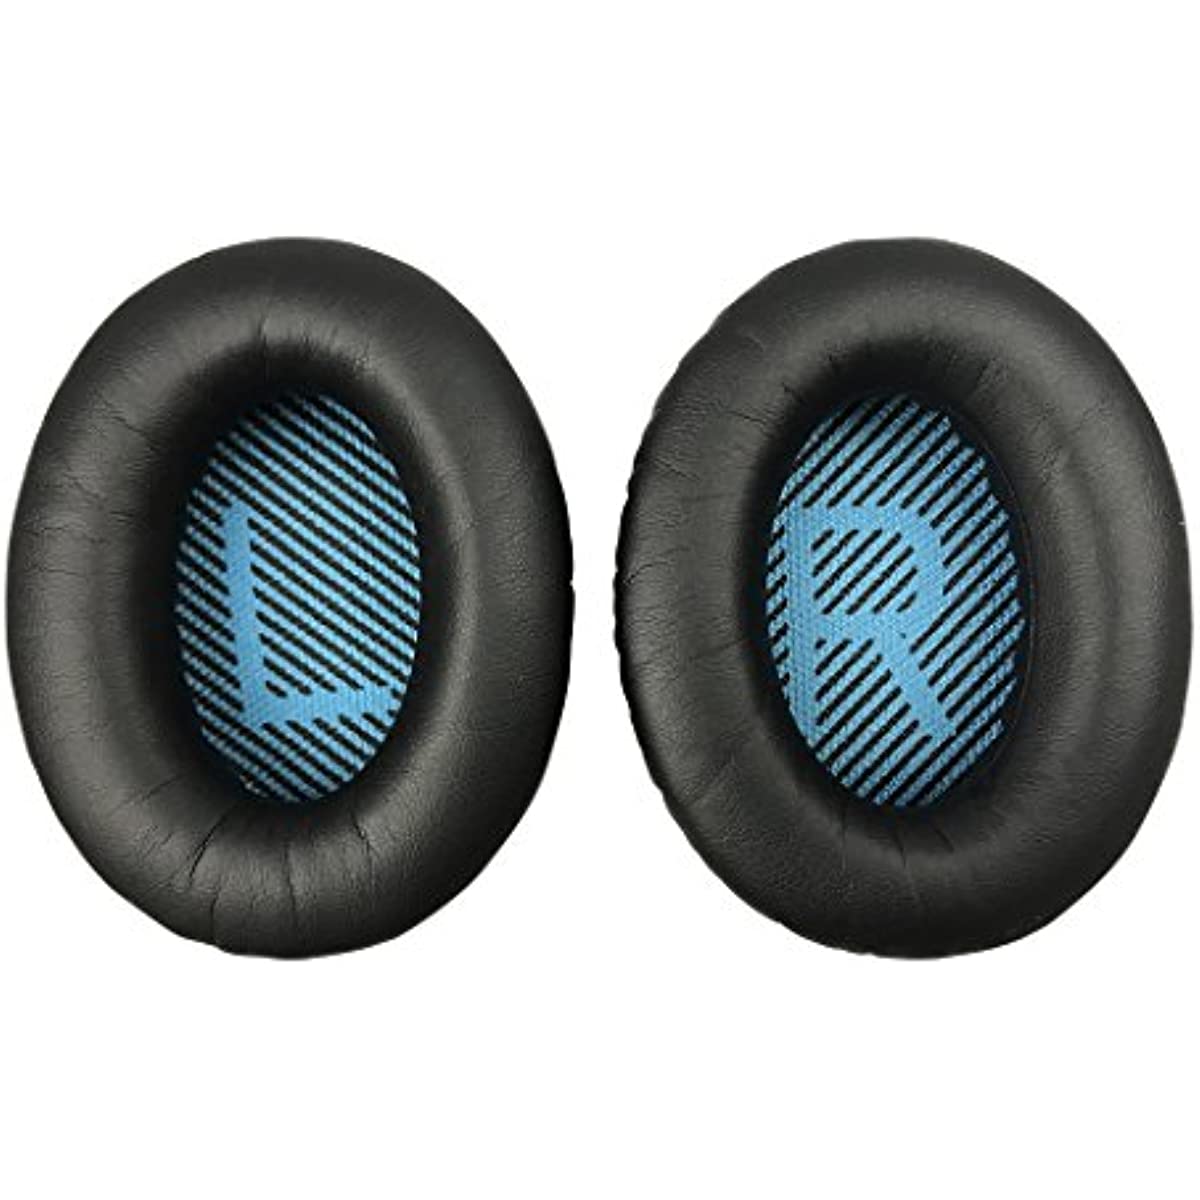 replacement ear pads for bose quietcomfort qc 2 15 25 35 ear cushions for qc2 qc15 qc25 qc35 soundlink soundtrue around ear ii ae2 headphones black